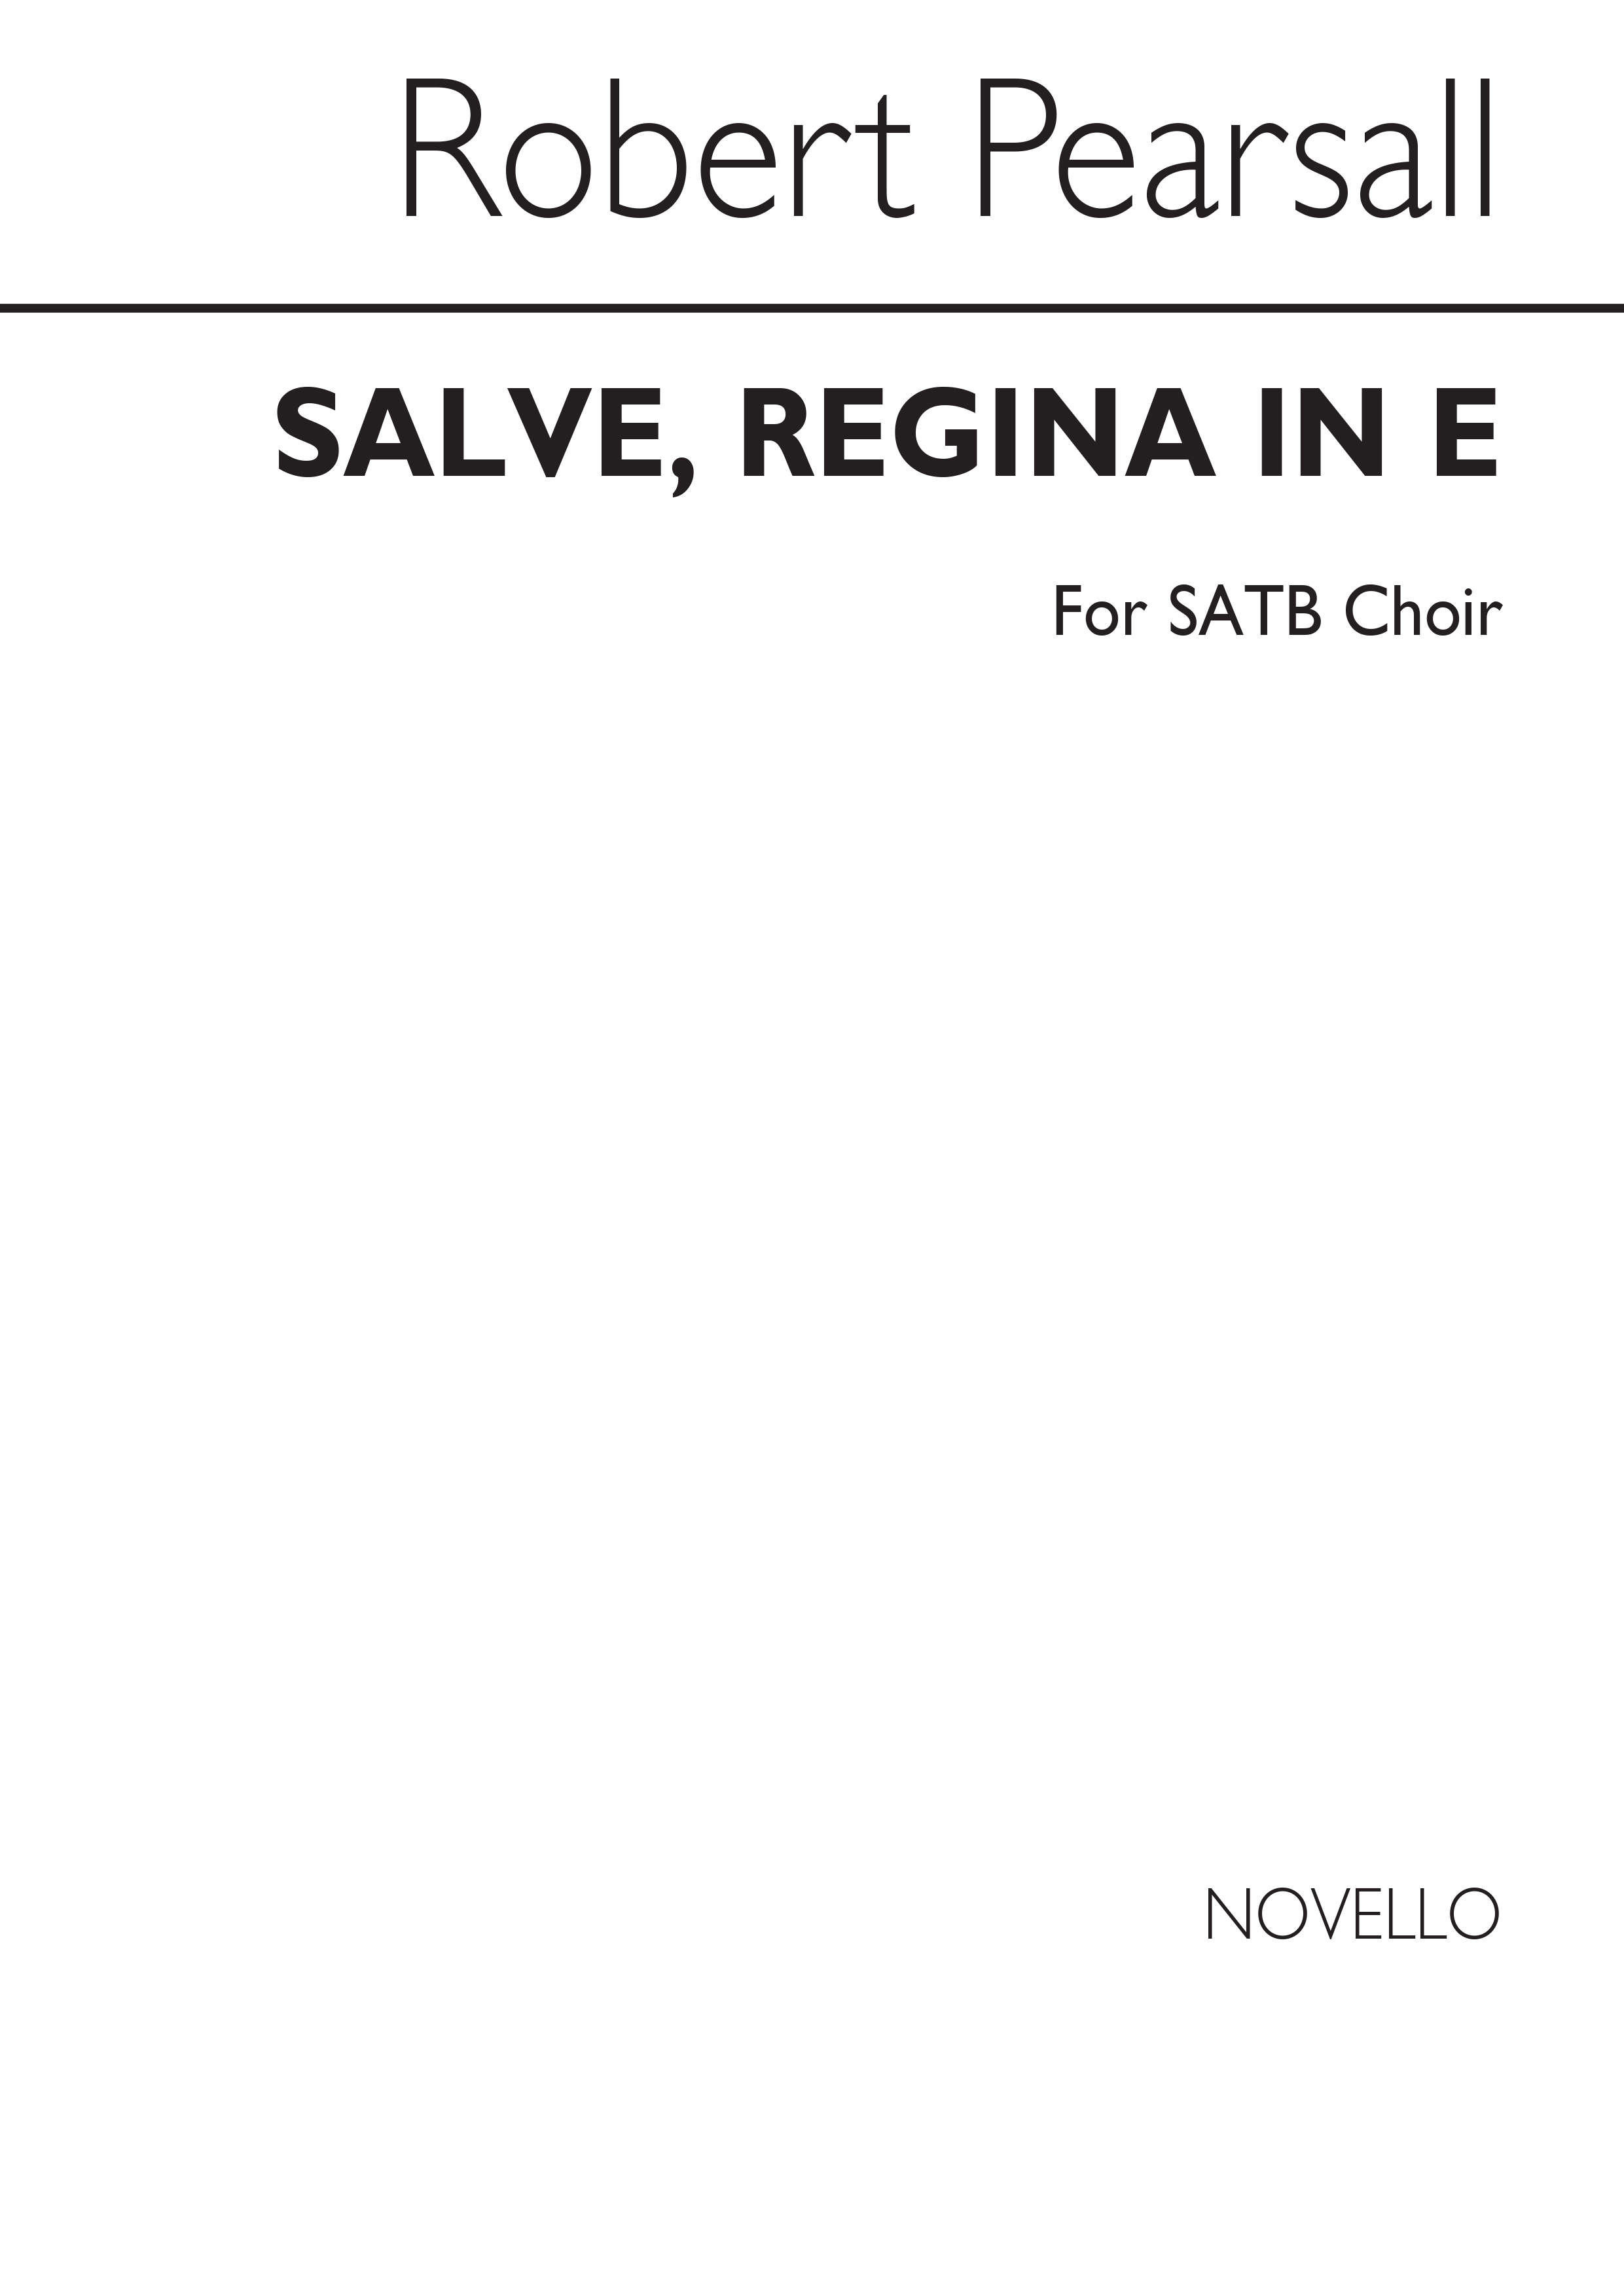 Robert Pearsall: De Pearsall Salve Regina In E: SATB: Vocal Score